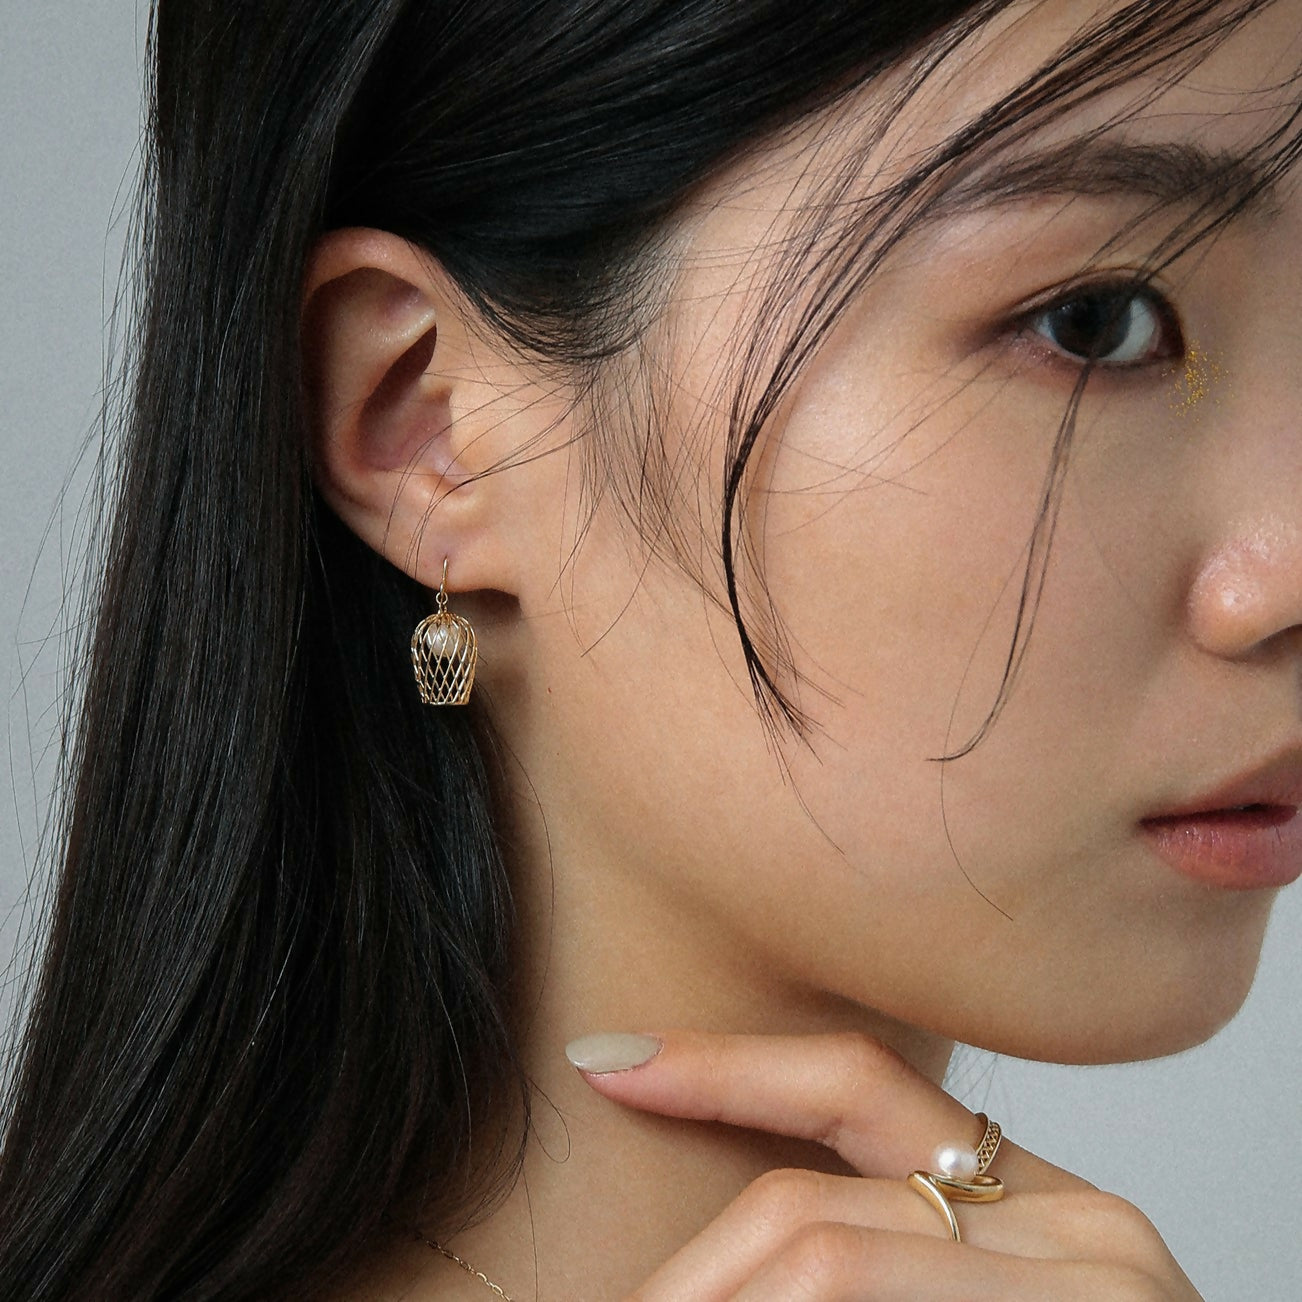 K10 ランタン パール ピアス / 10K lantern pearl pierced earring